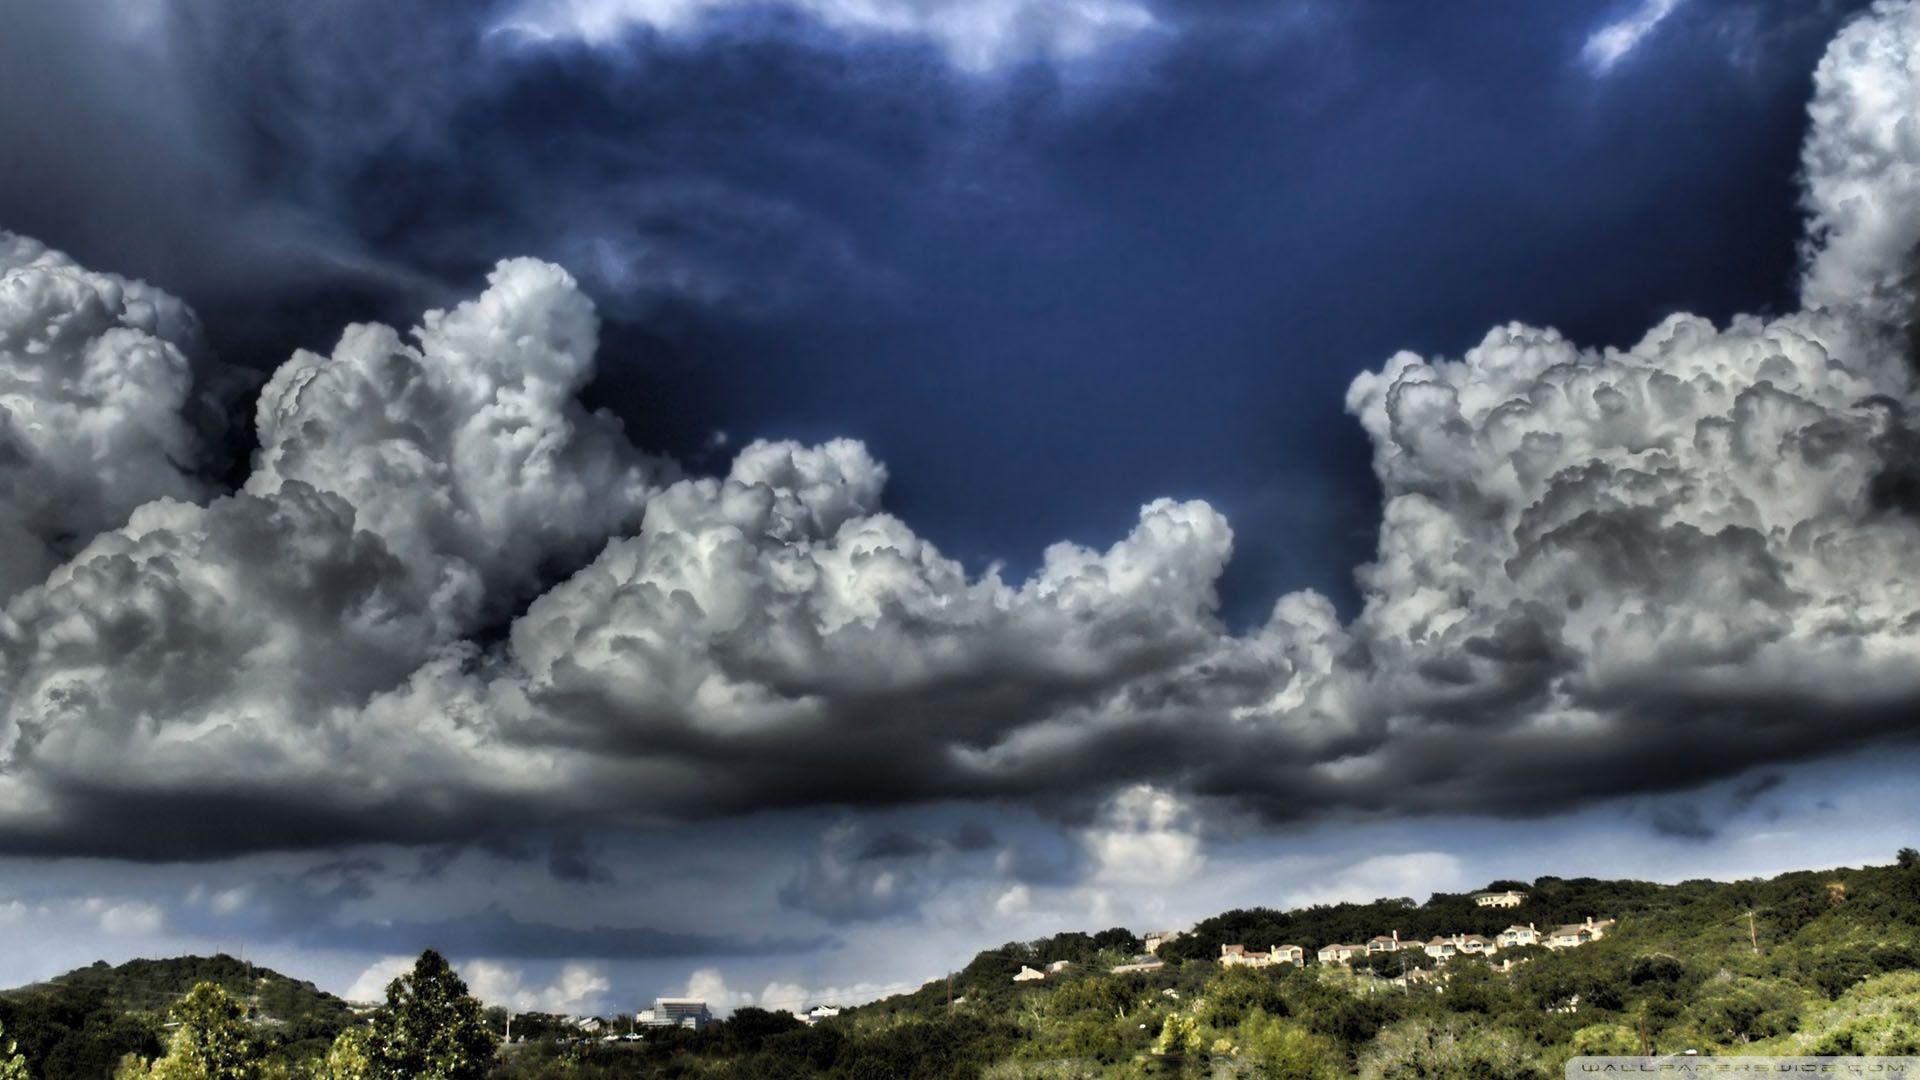 HD wallpaper: clounds, rain, cloudy, cloud - sky, beauty in nature, storm |  Wallpaper Flare